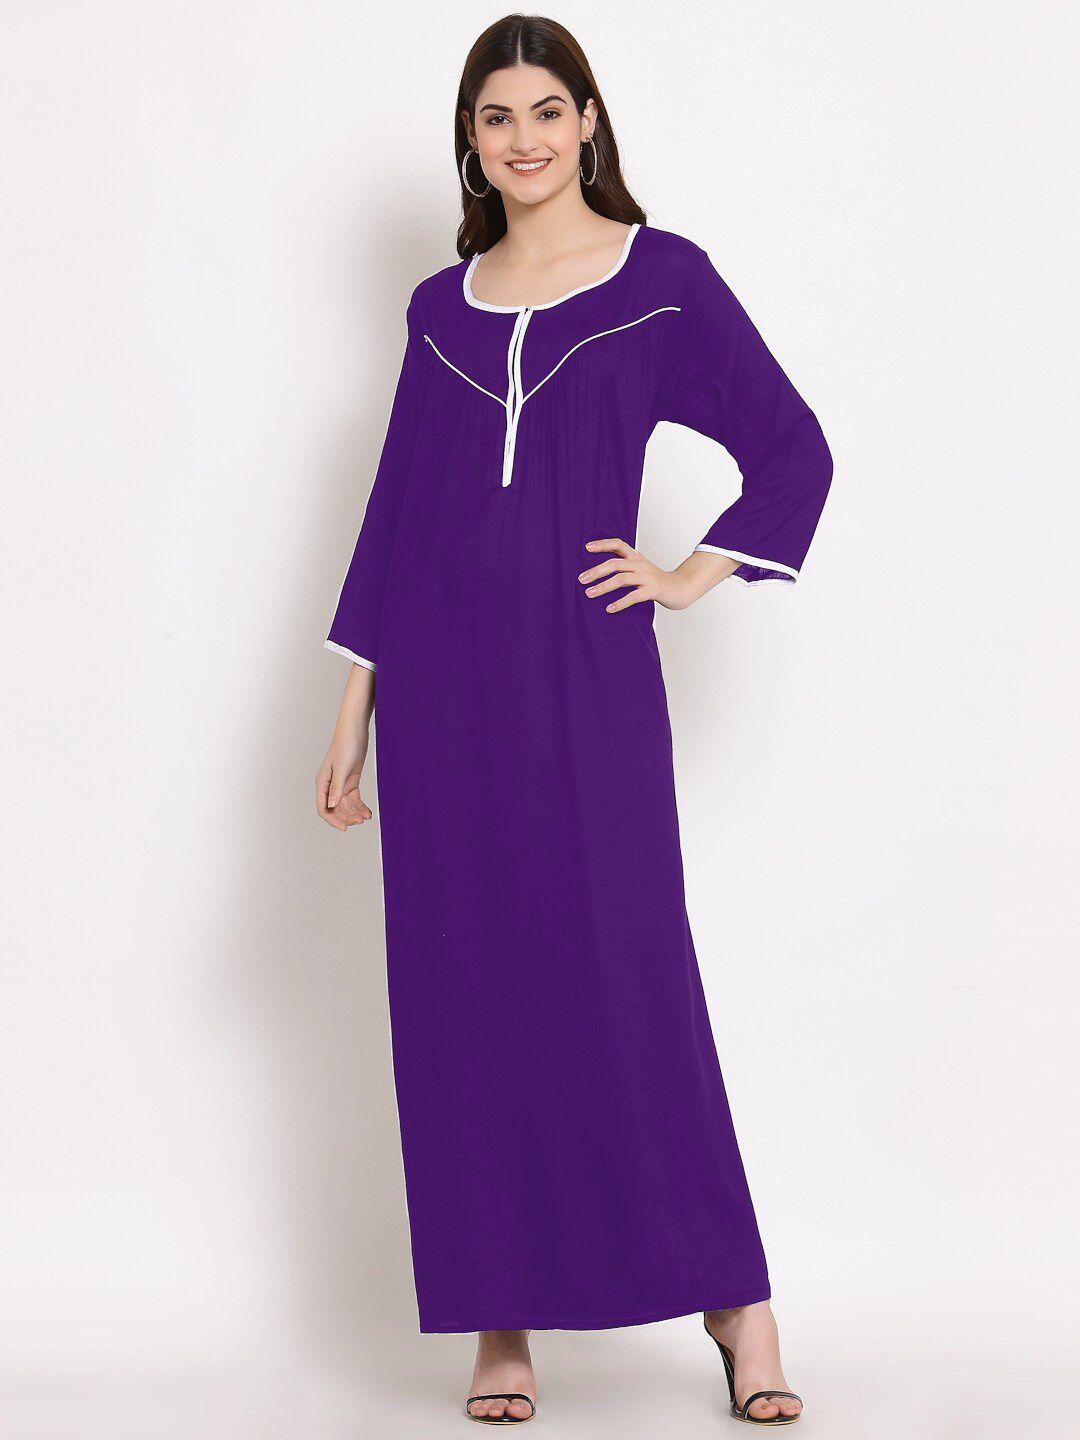 patrorna women purple maxi nightdress